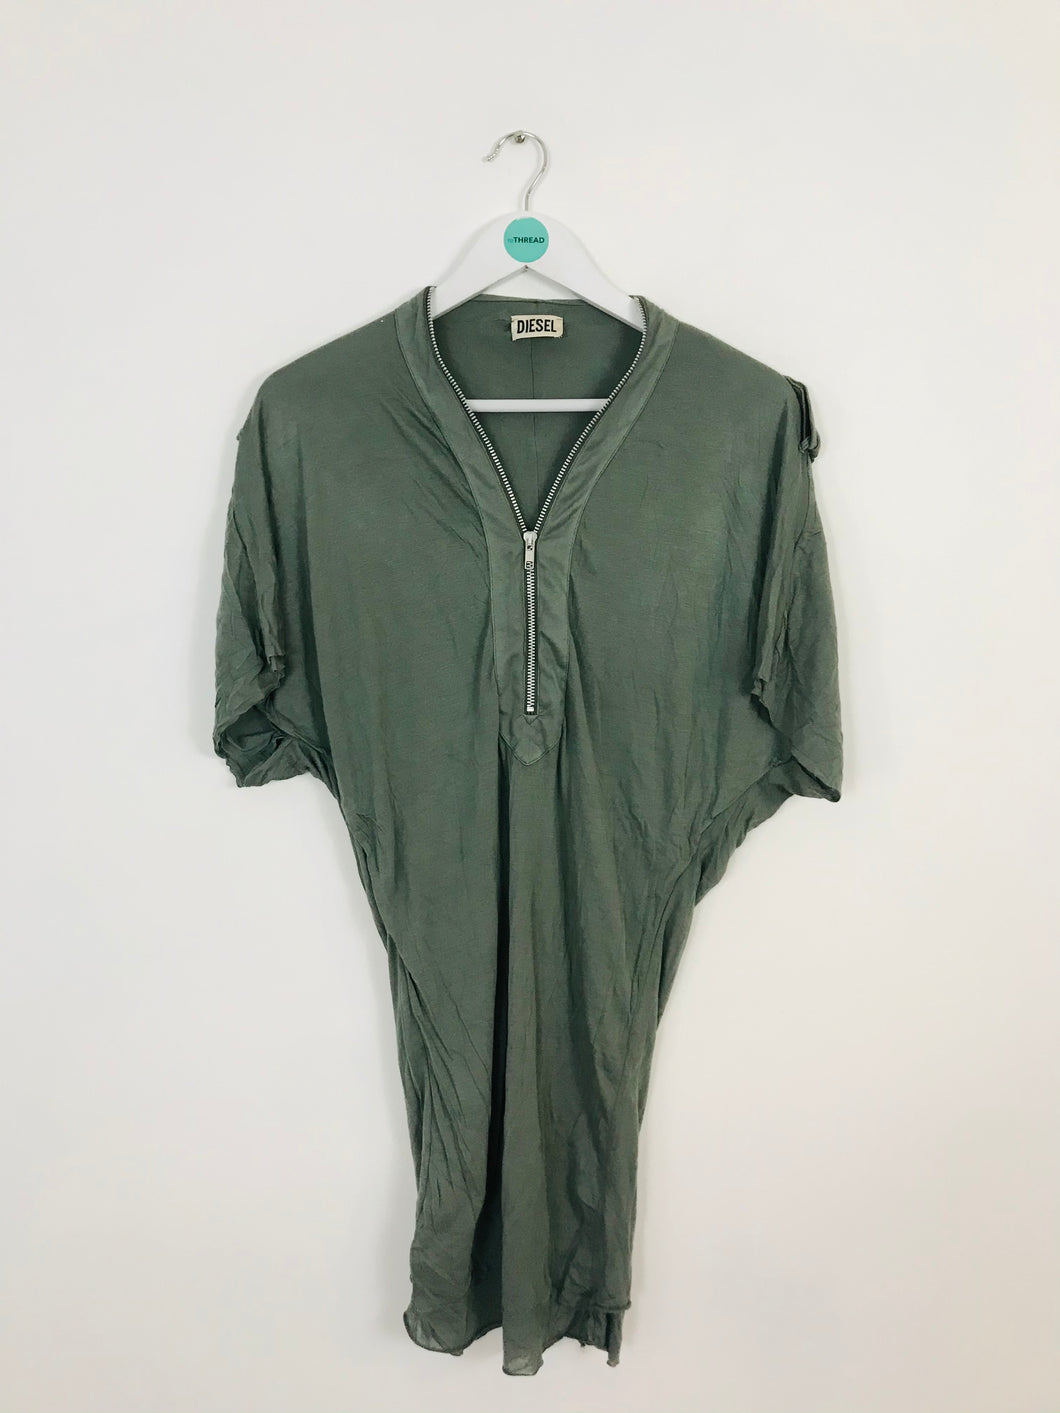 Diesel Women’s Batwing Sleeve Zip T-Shirt Top | L | Khaki Green